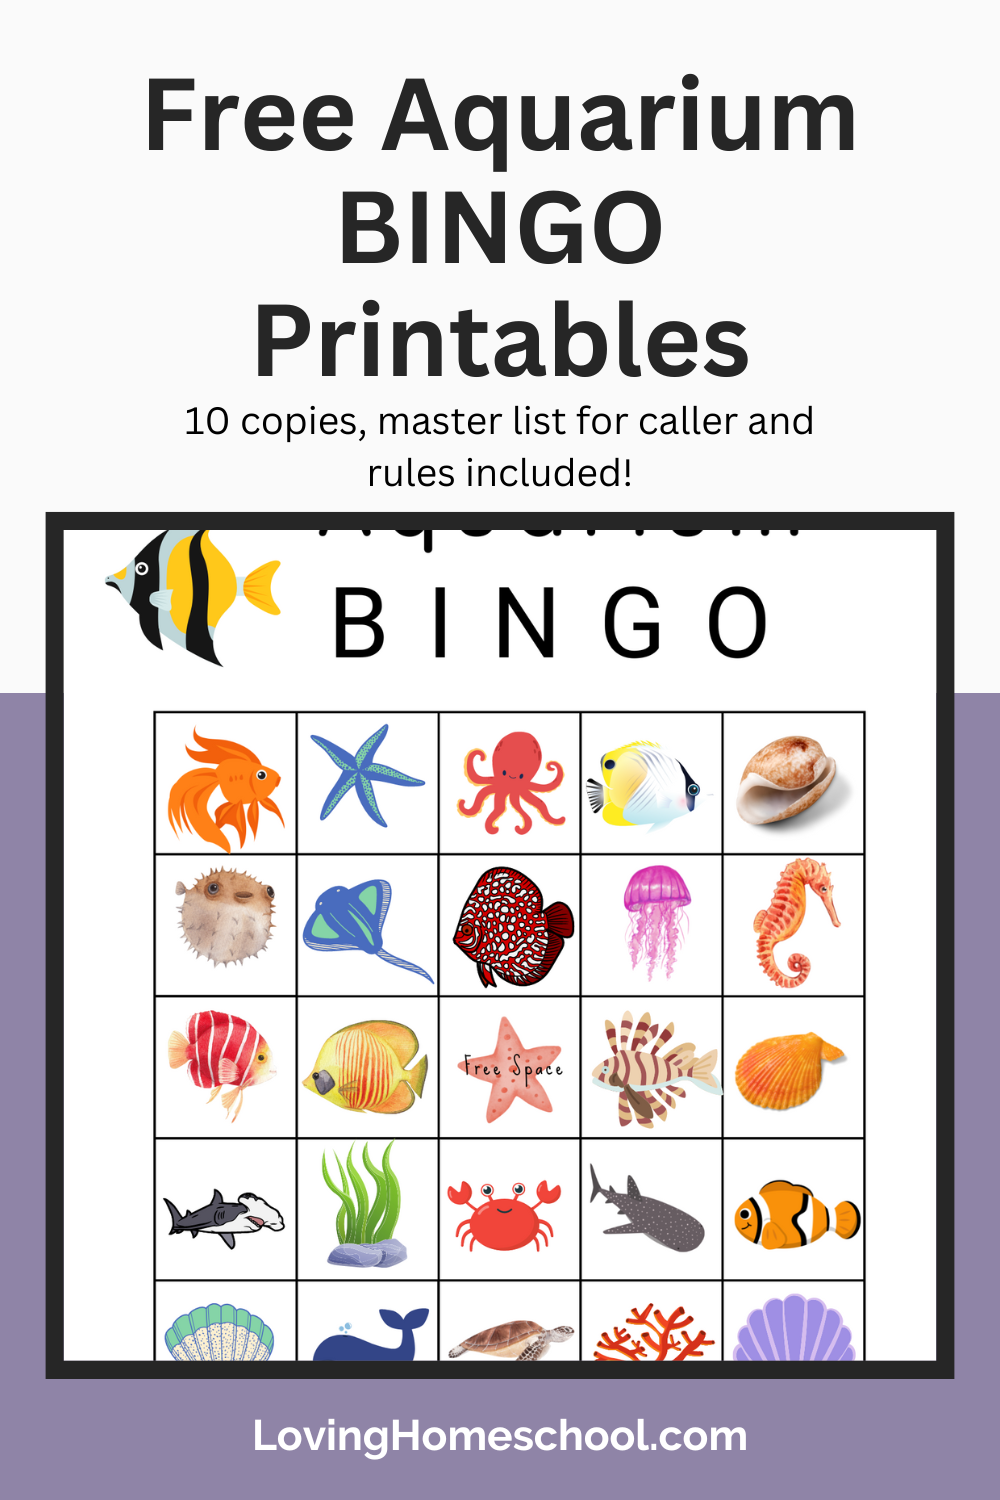 Free Aquarium BINGO Printables Pinterest Pin